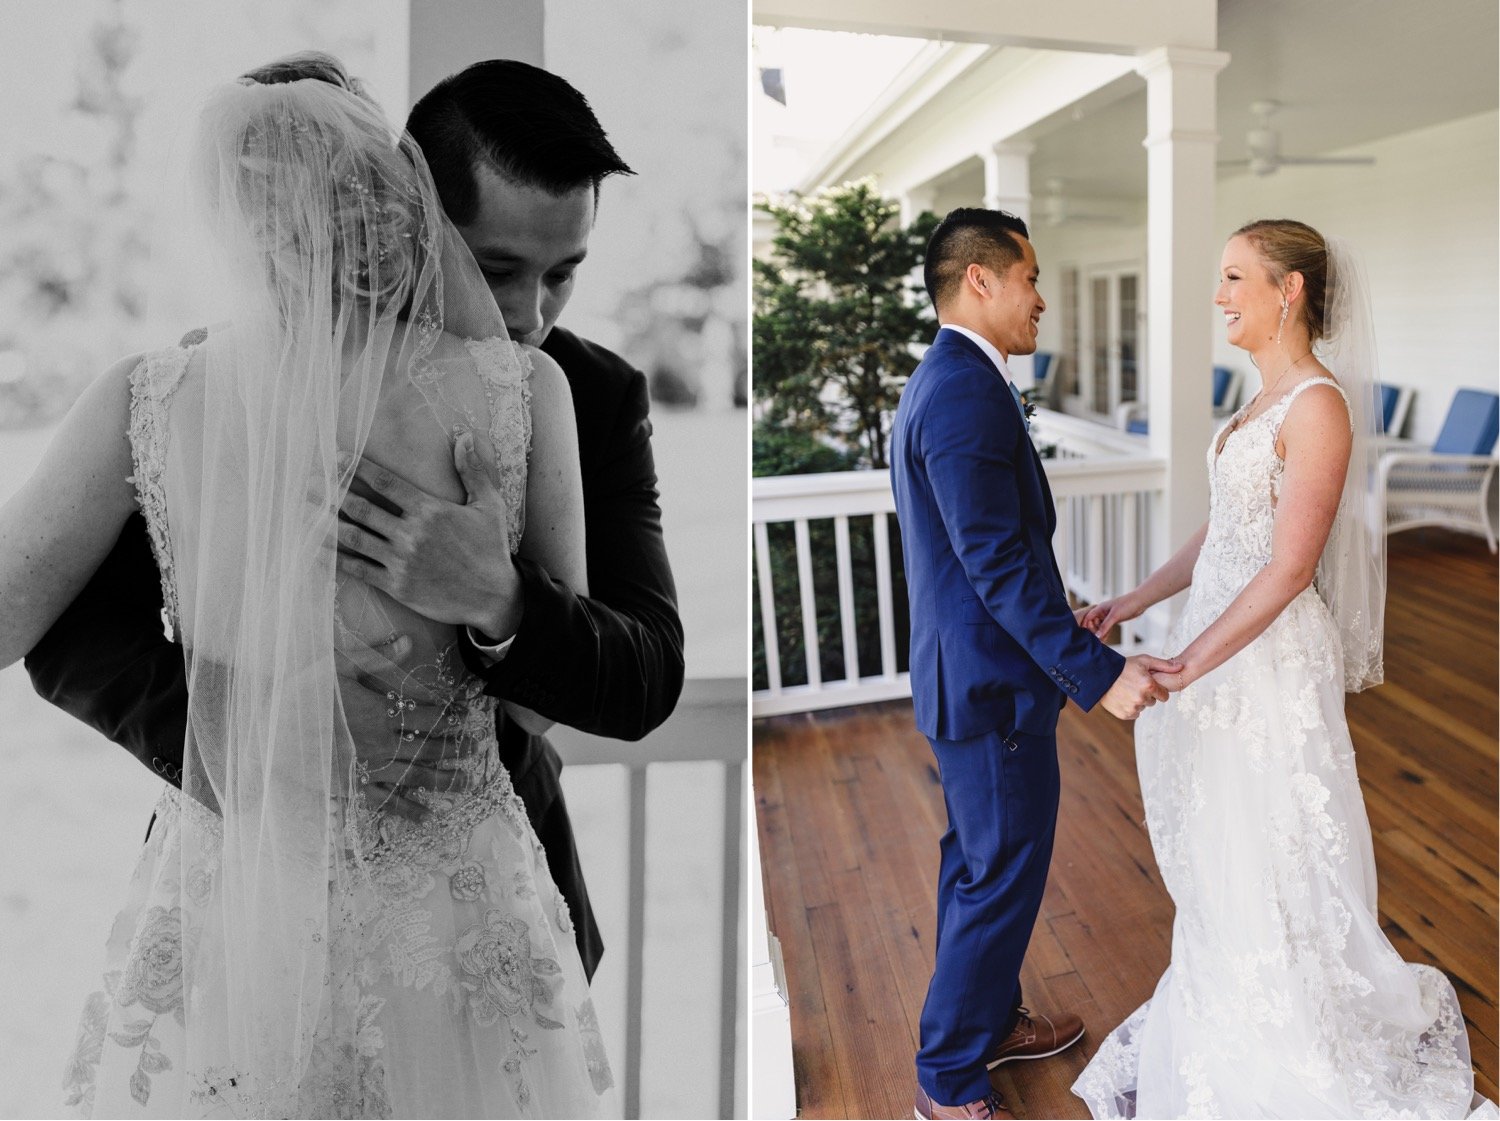 029_Alyssa&Vince-216-2_Alyssa&Vince-229_Hawthorne-house-kansas-city-wedding-photography-missouri-parkville-kelsey-diane-spring-bride-groom.jpg